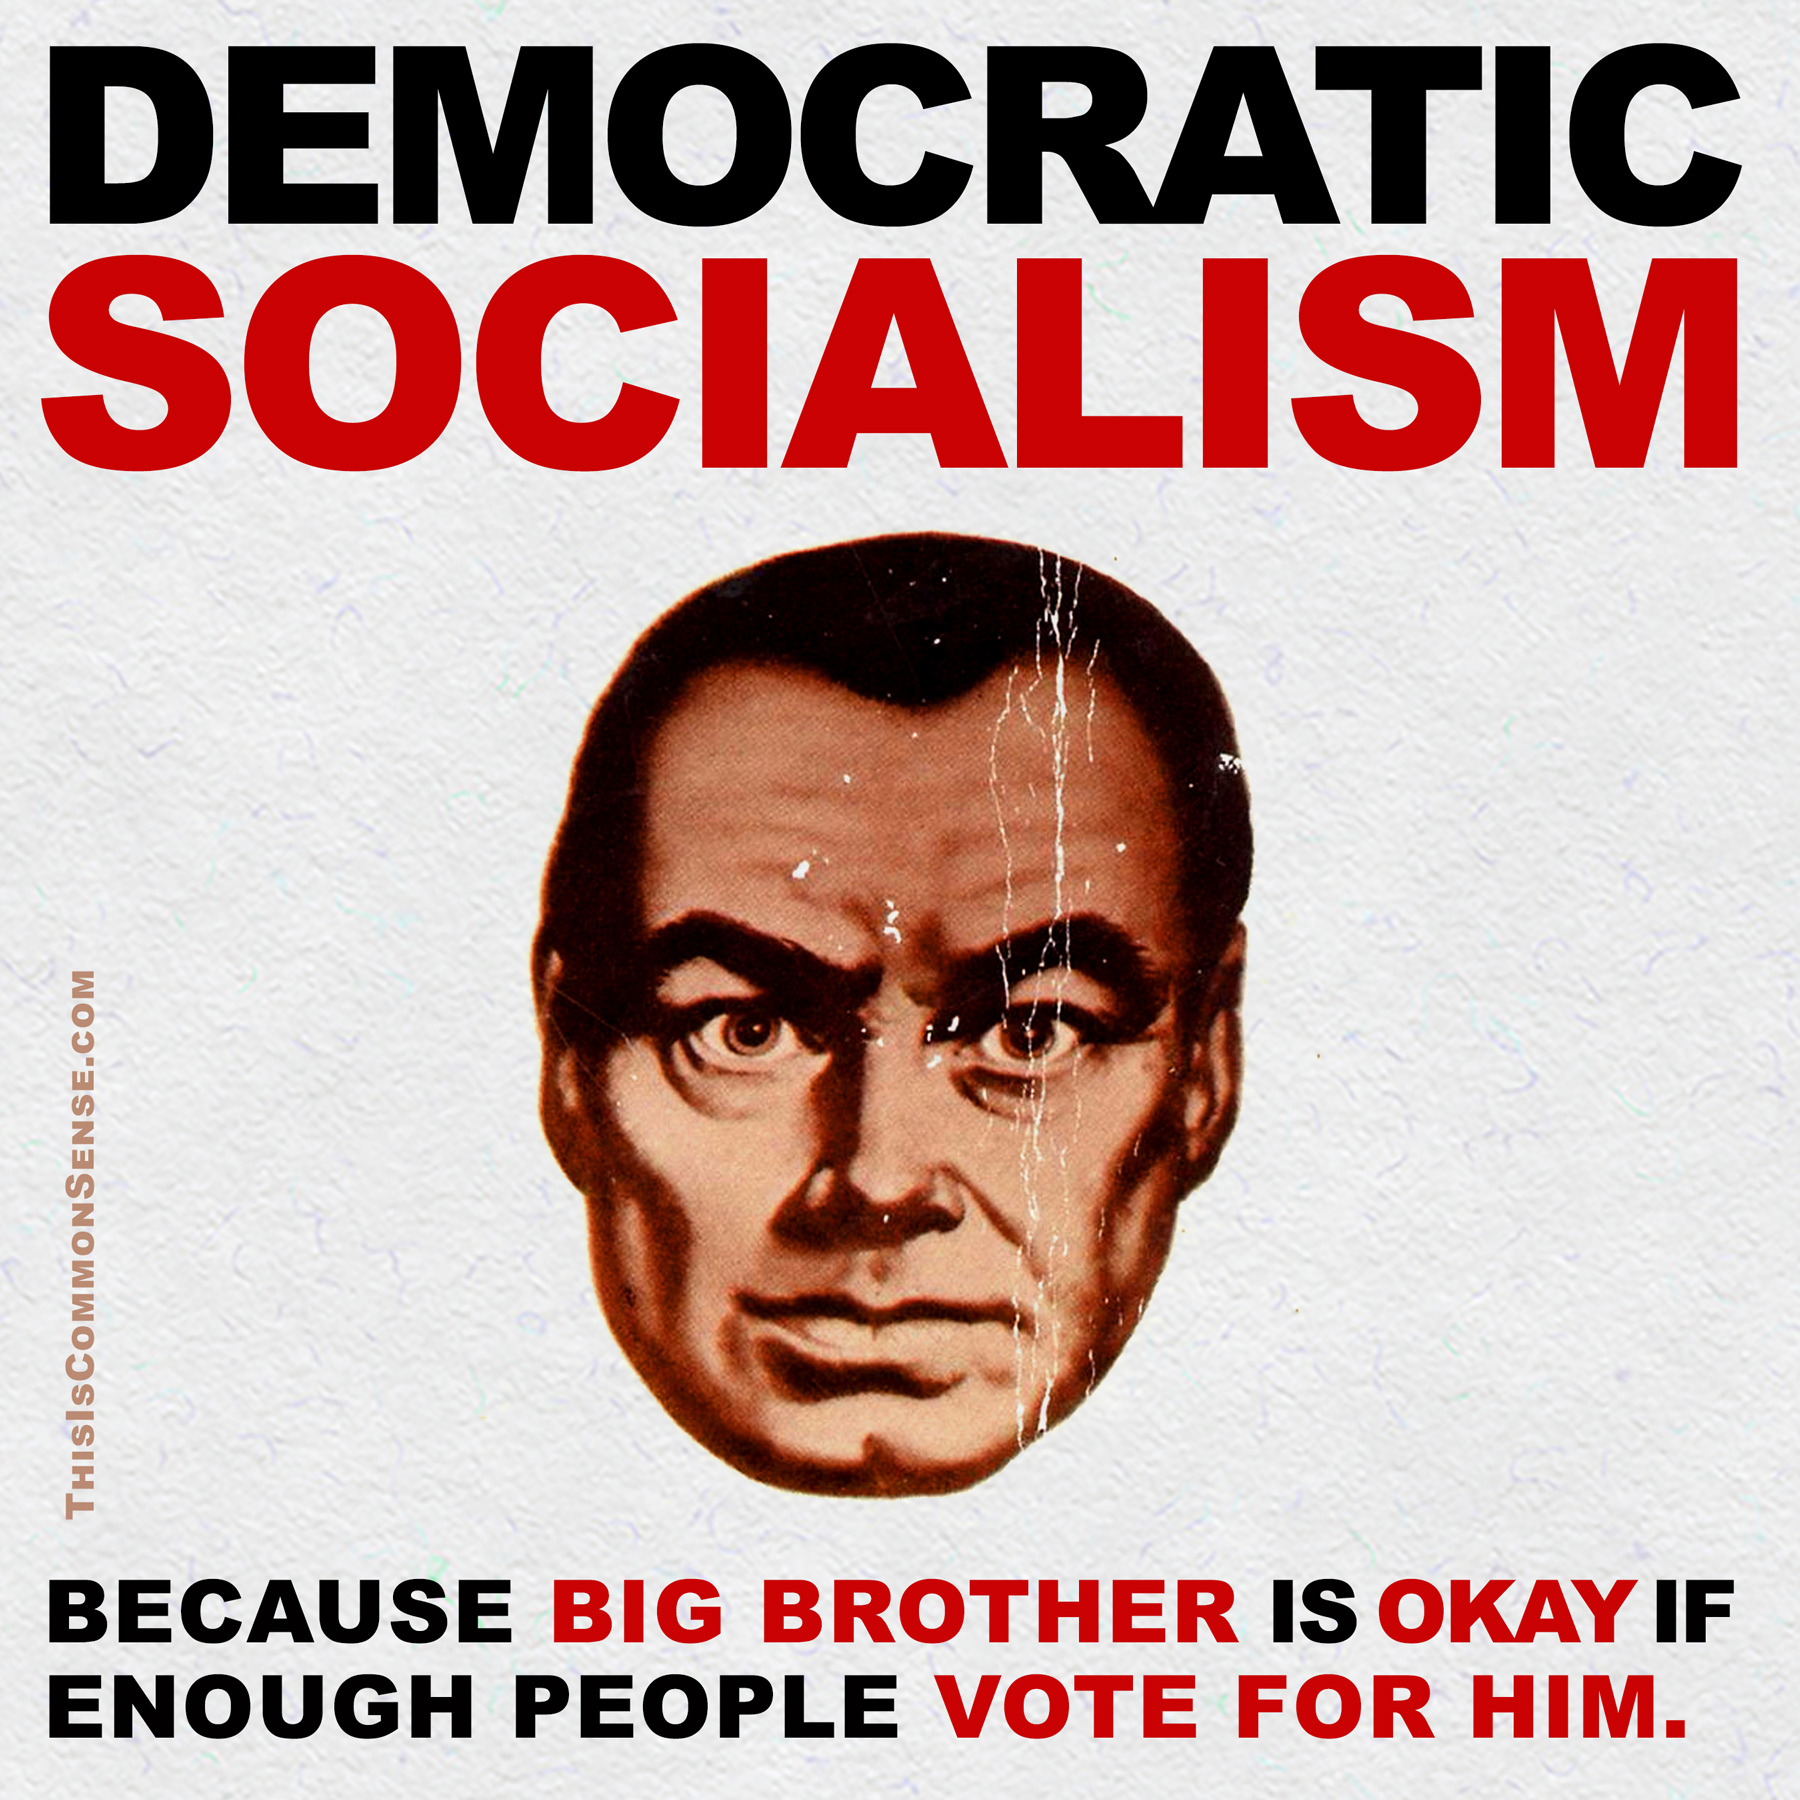 Democratic Socialism, Big Brother, socialism, vote, voting, egalitarian, meme, Jim Gill, Paul Jacob, Common Sense